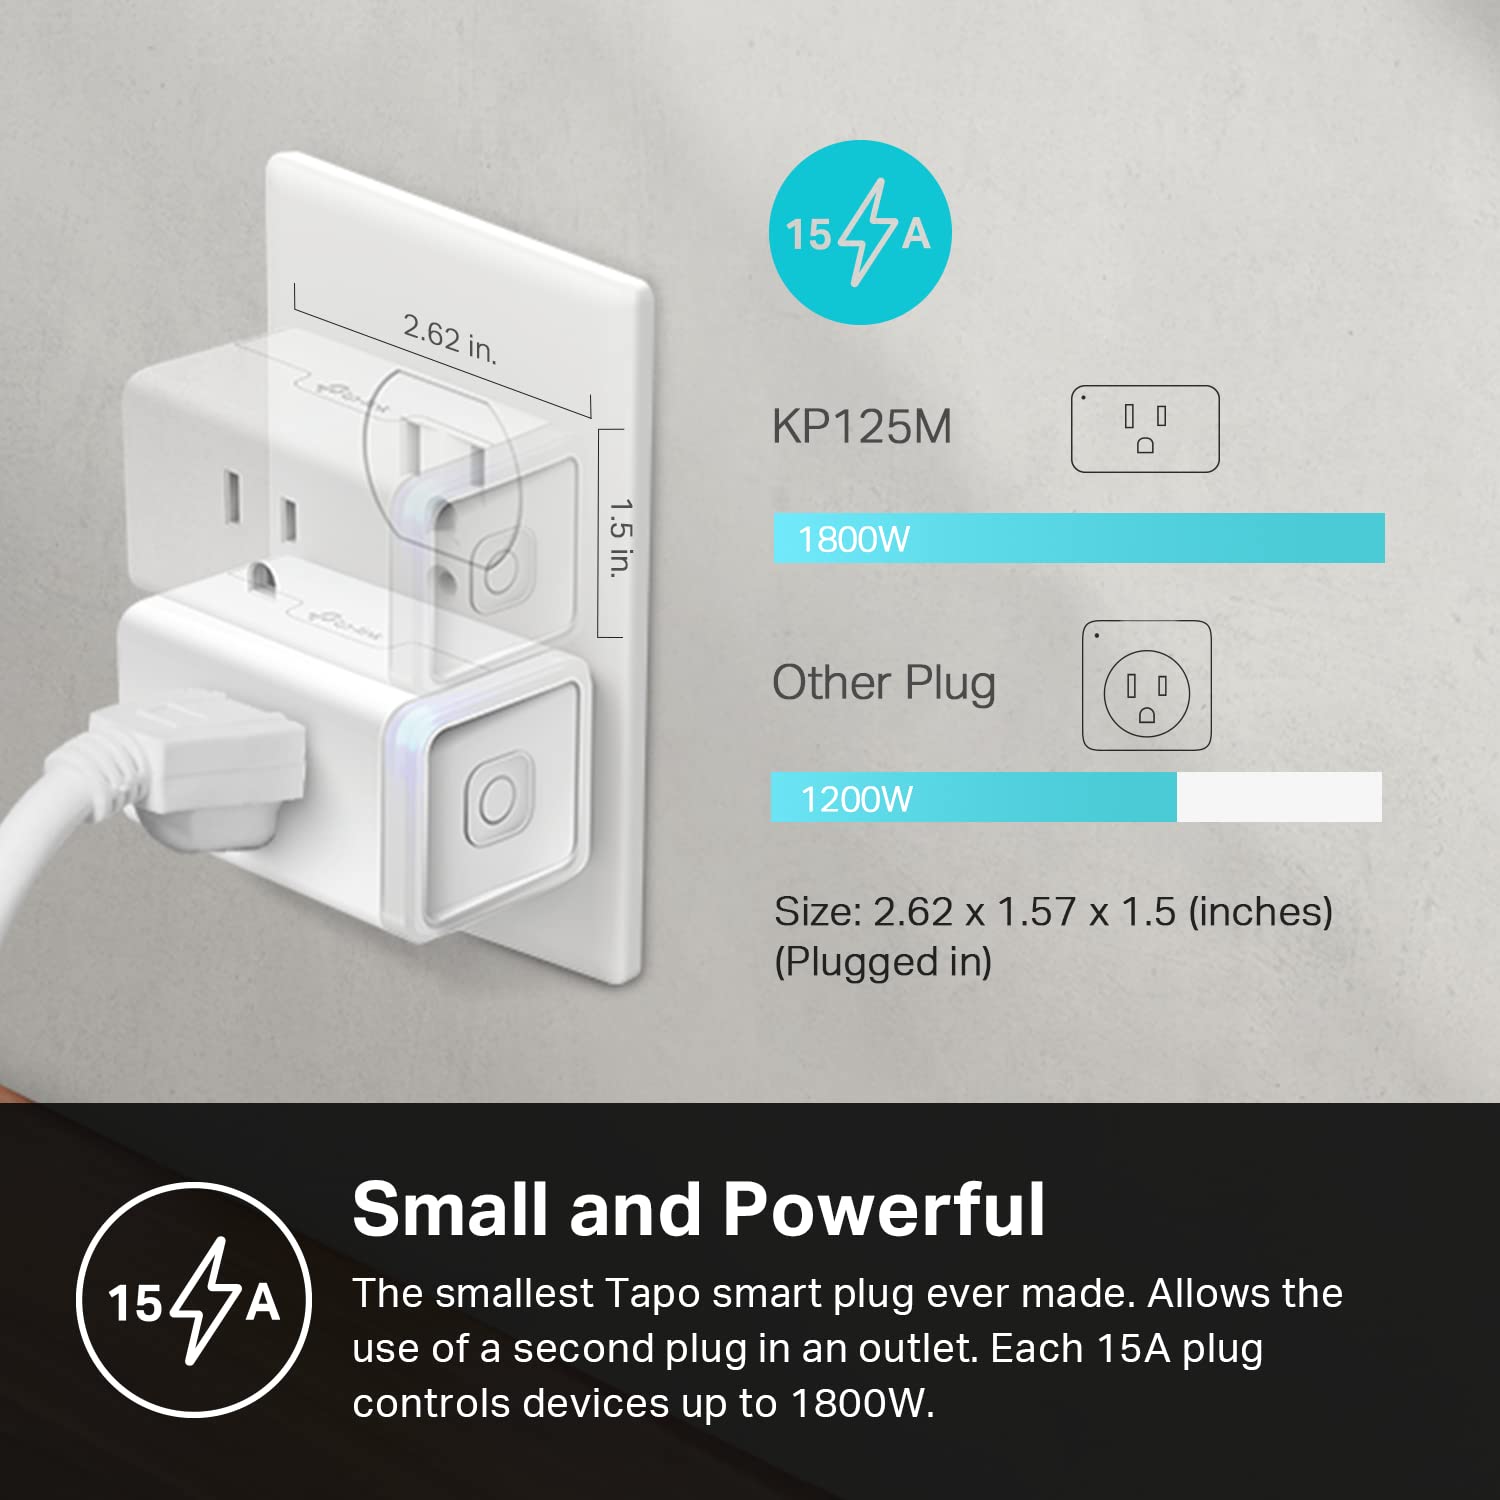 Kasa Matter Smart Plug w/ Energy Monitoring, Compact Design, 15A